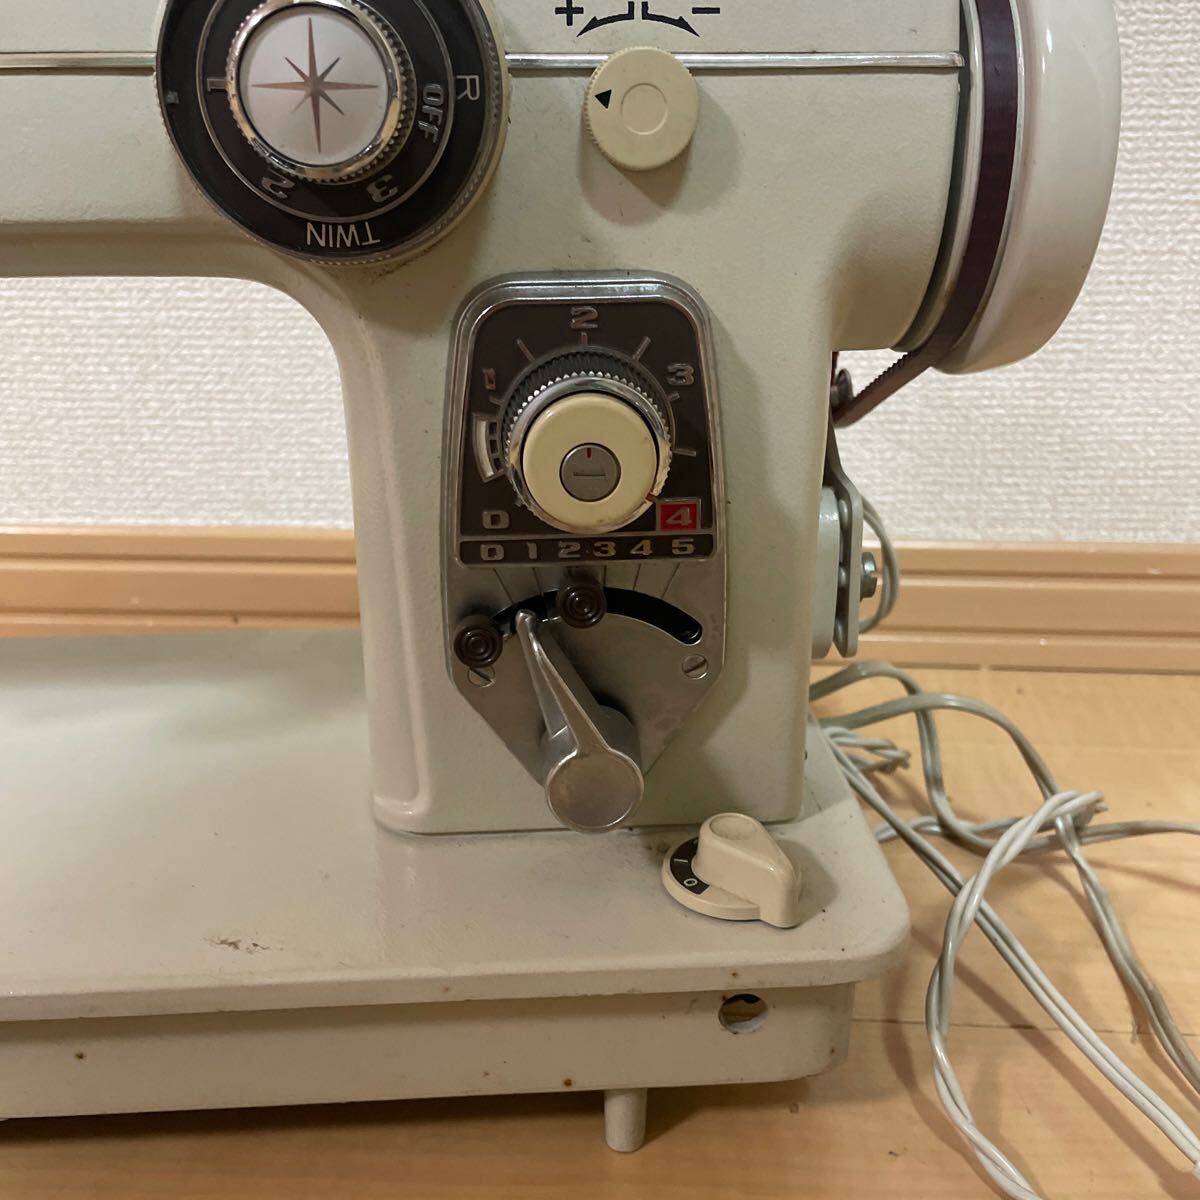 JANOME Janome швейная машина MODEL 680